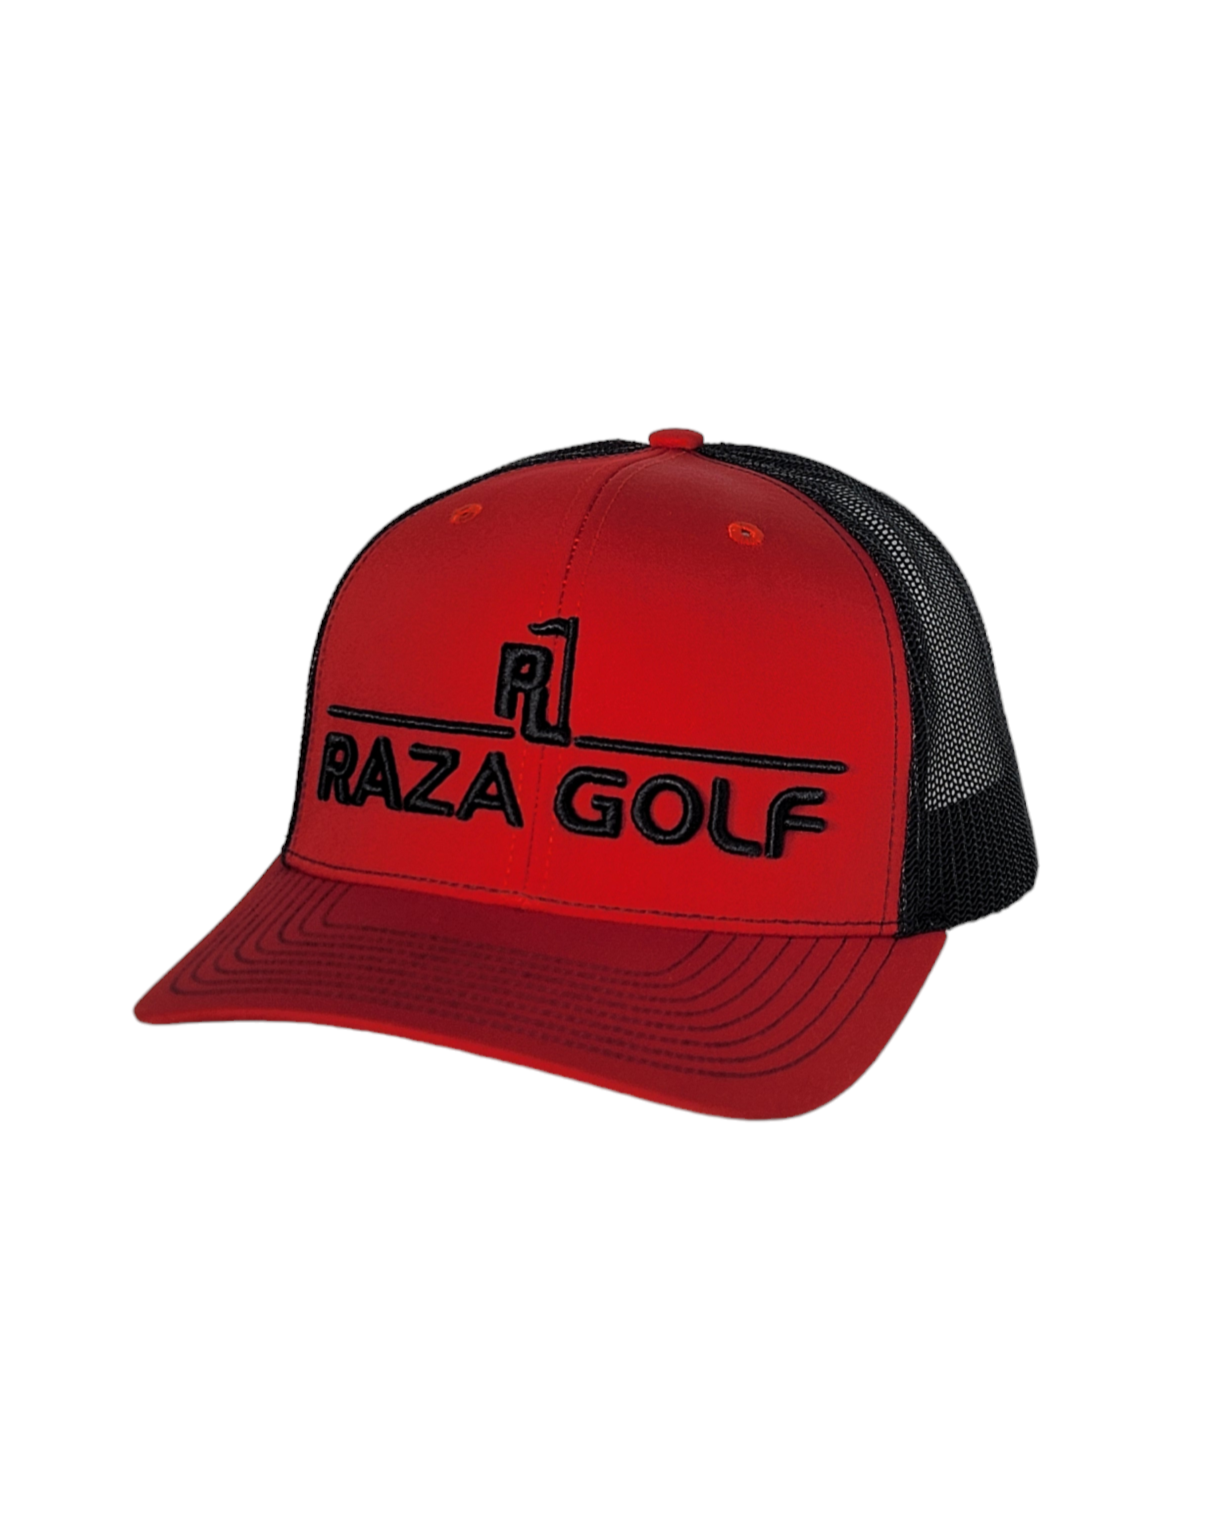 Raza Golf Red/Black Linear Trucker Hat